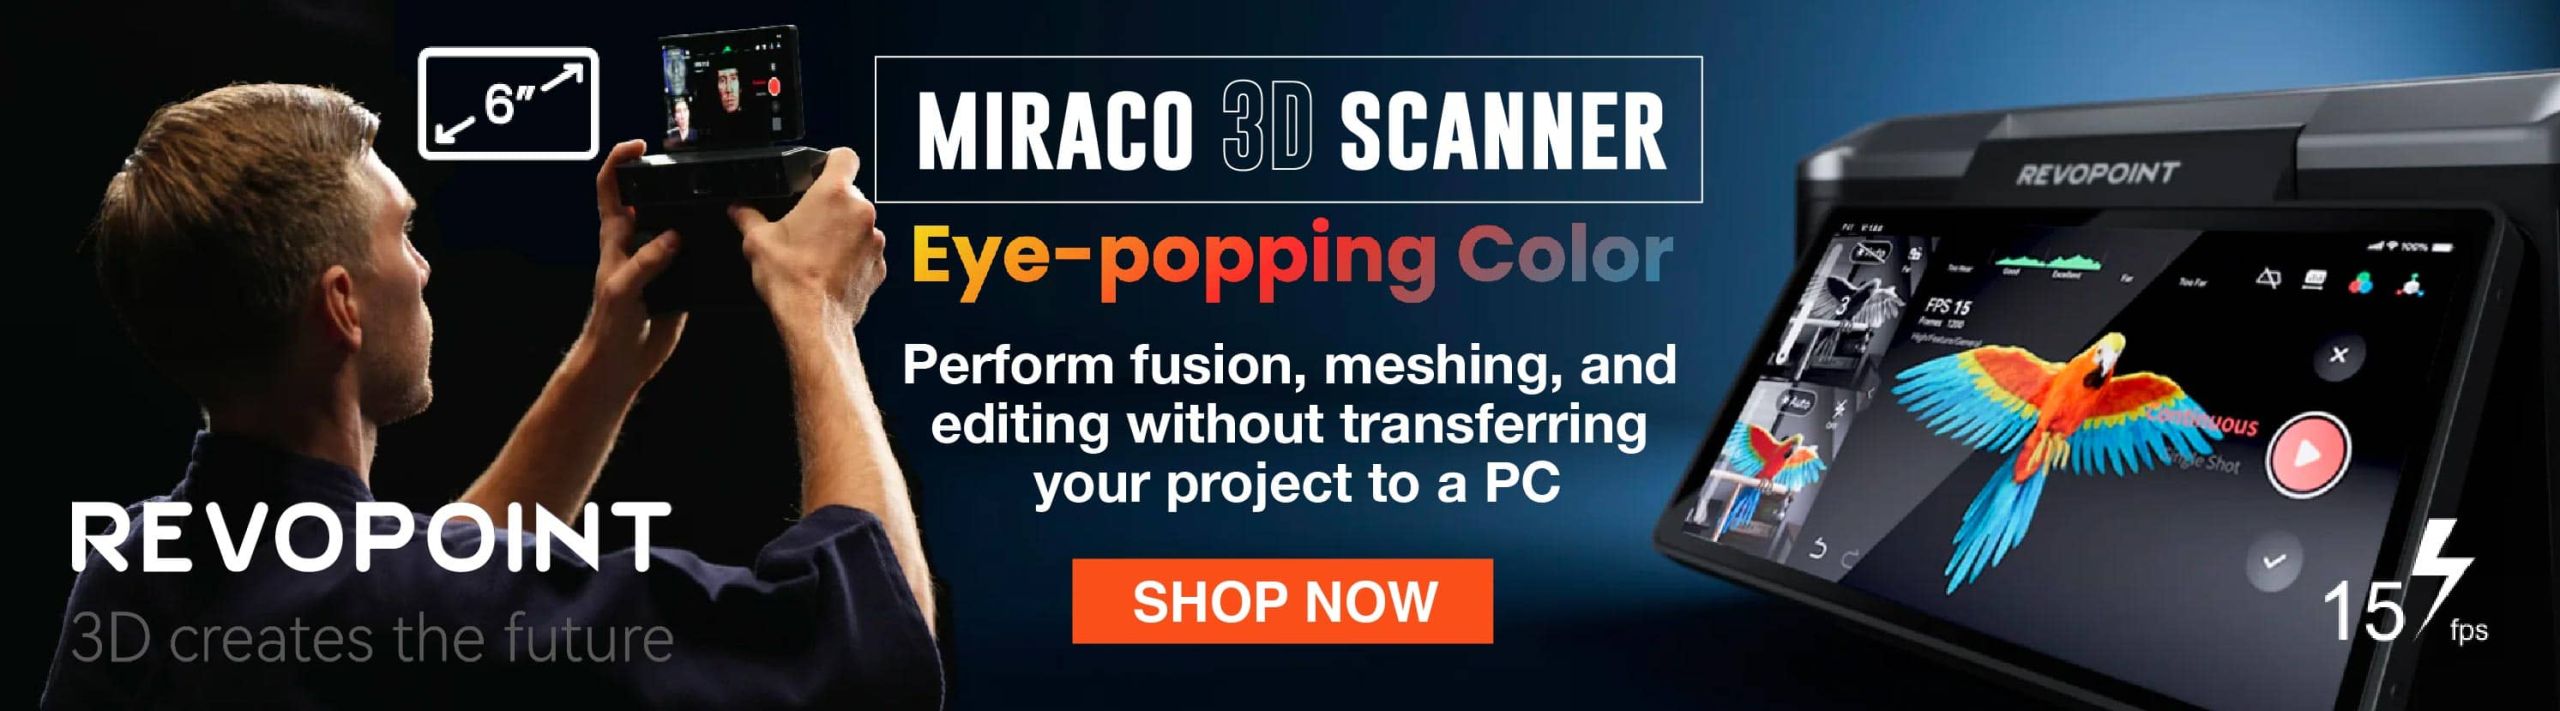 Miraco 3D Scanner 3D Junkie Revopoint